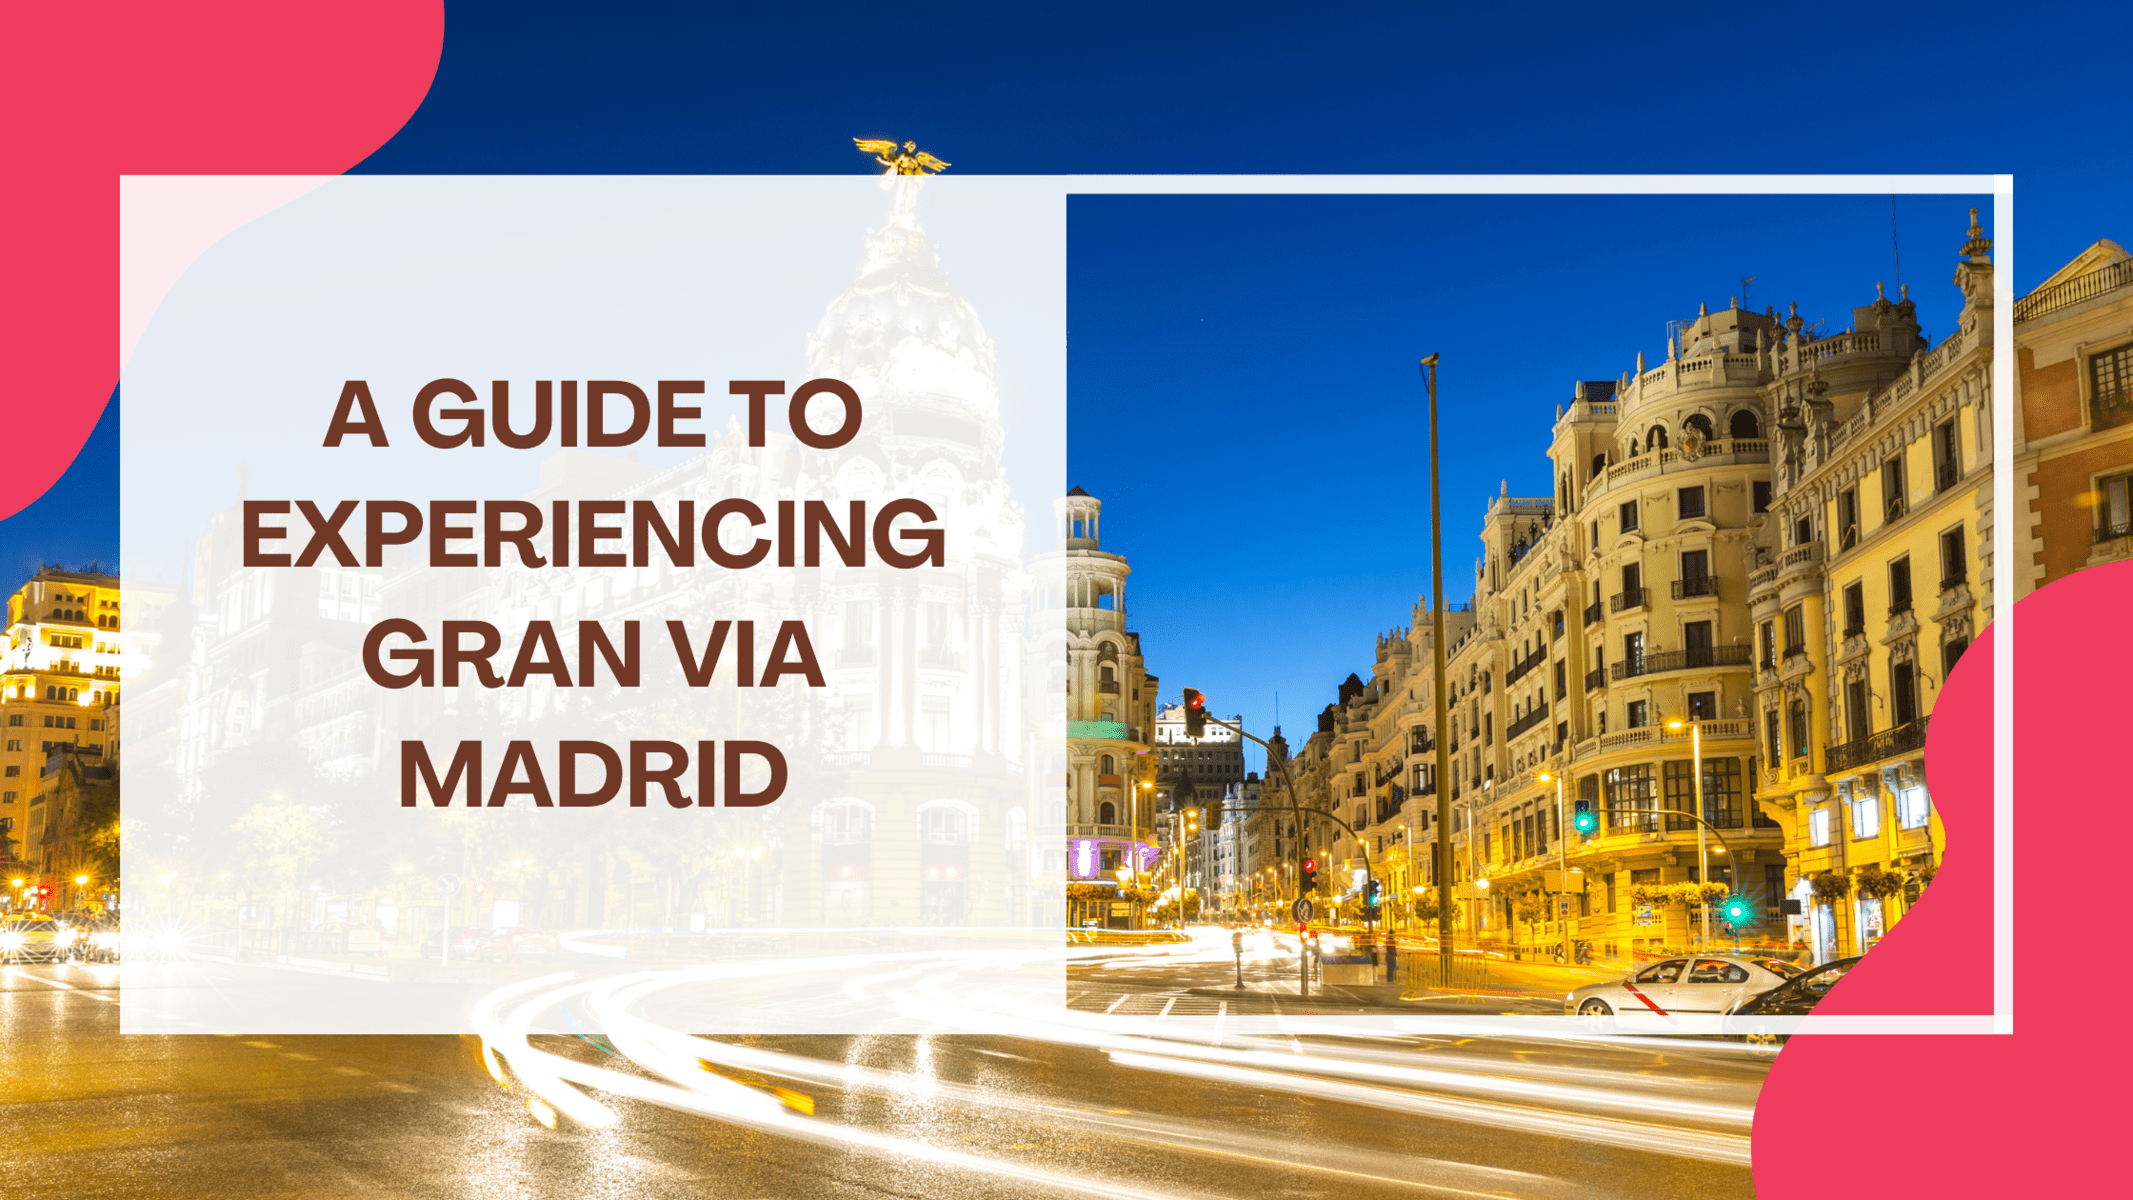 Guide to Gran Via in Madrid